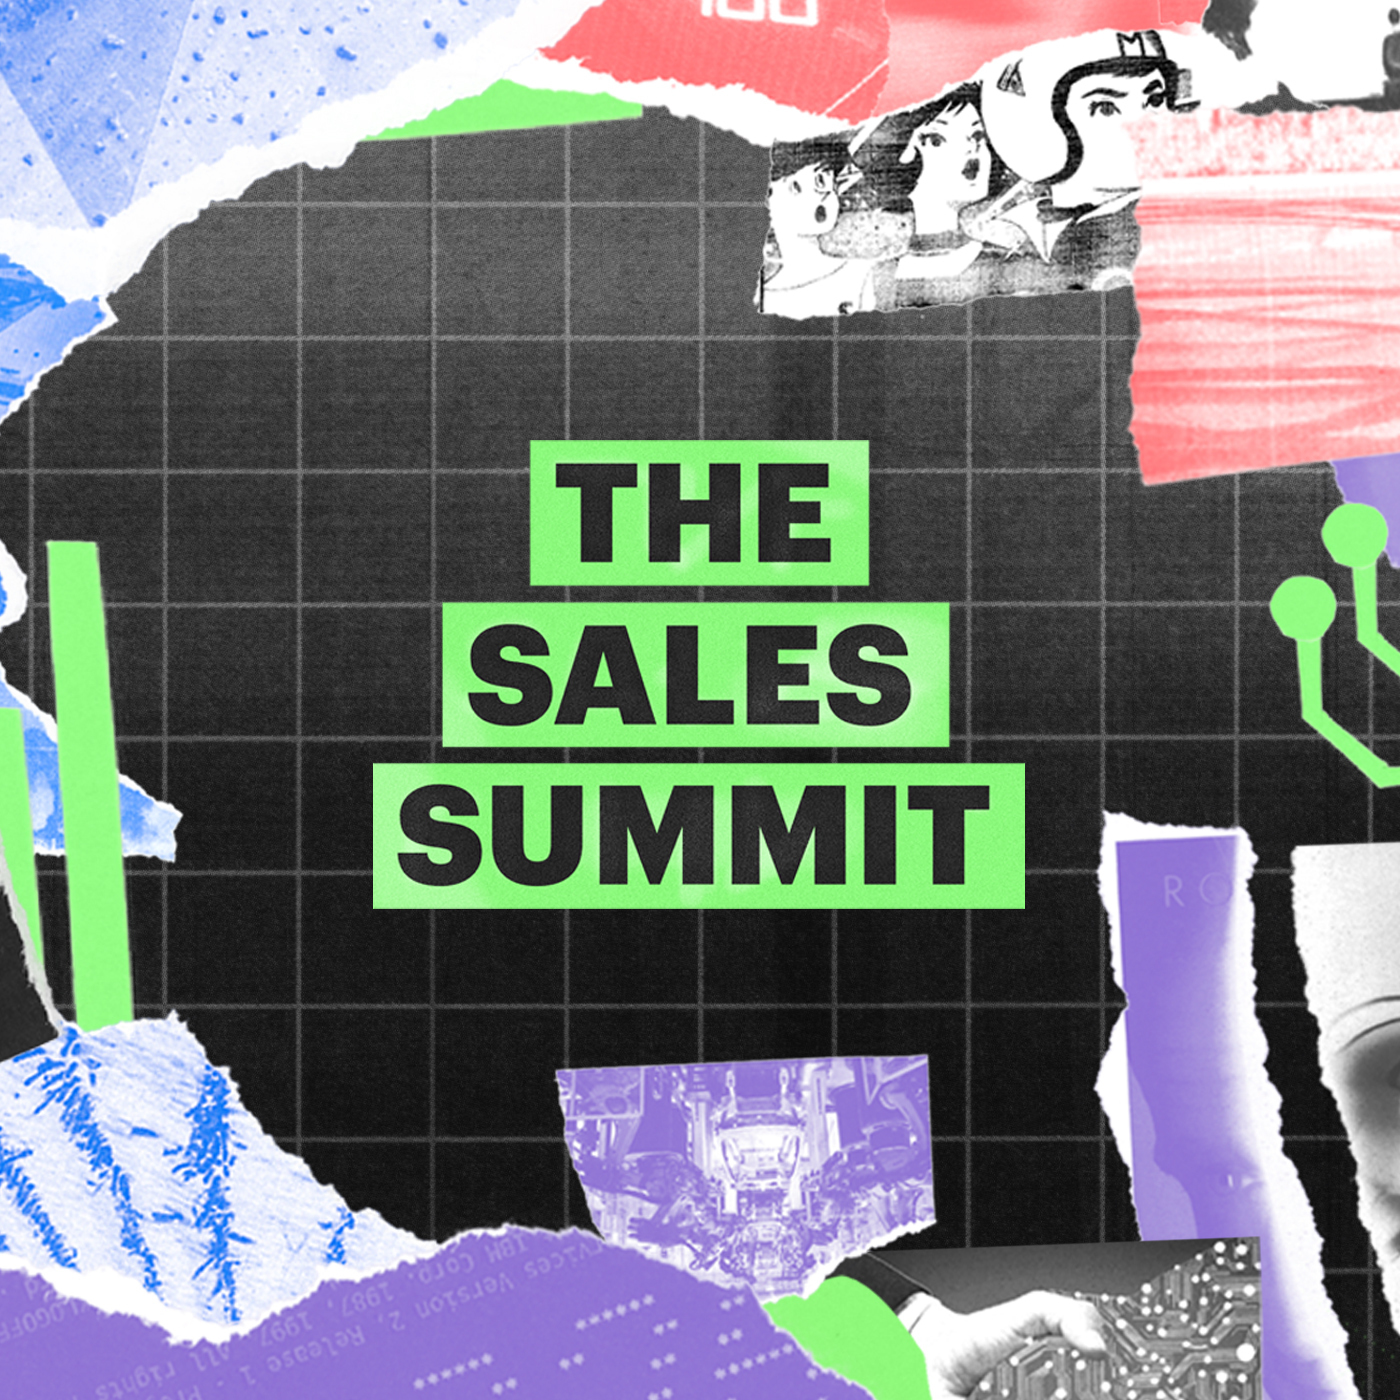 The Sales Summit: In summation